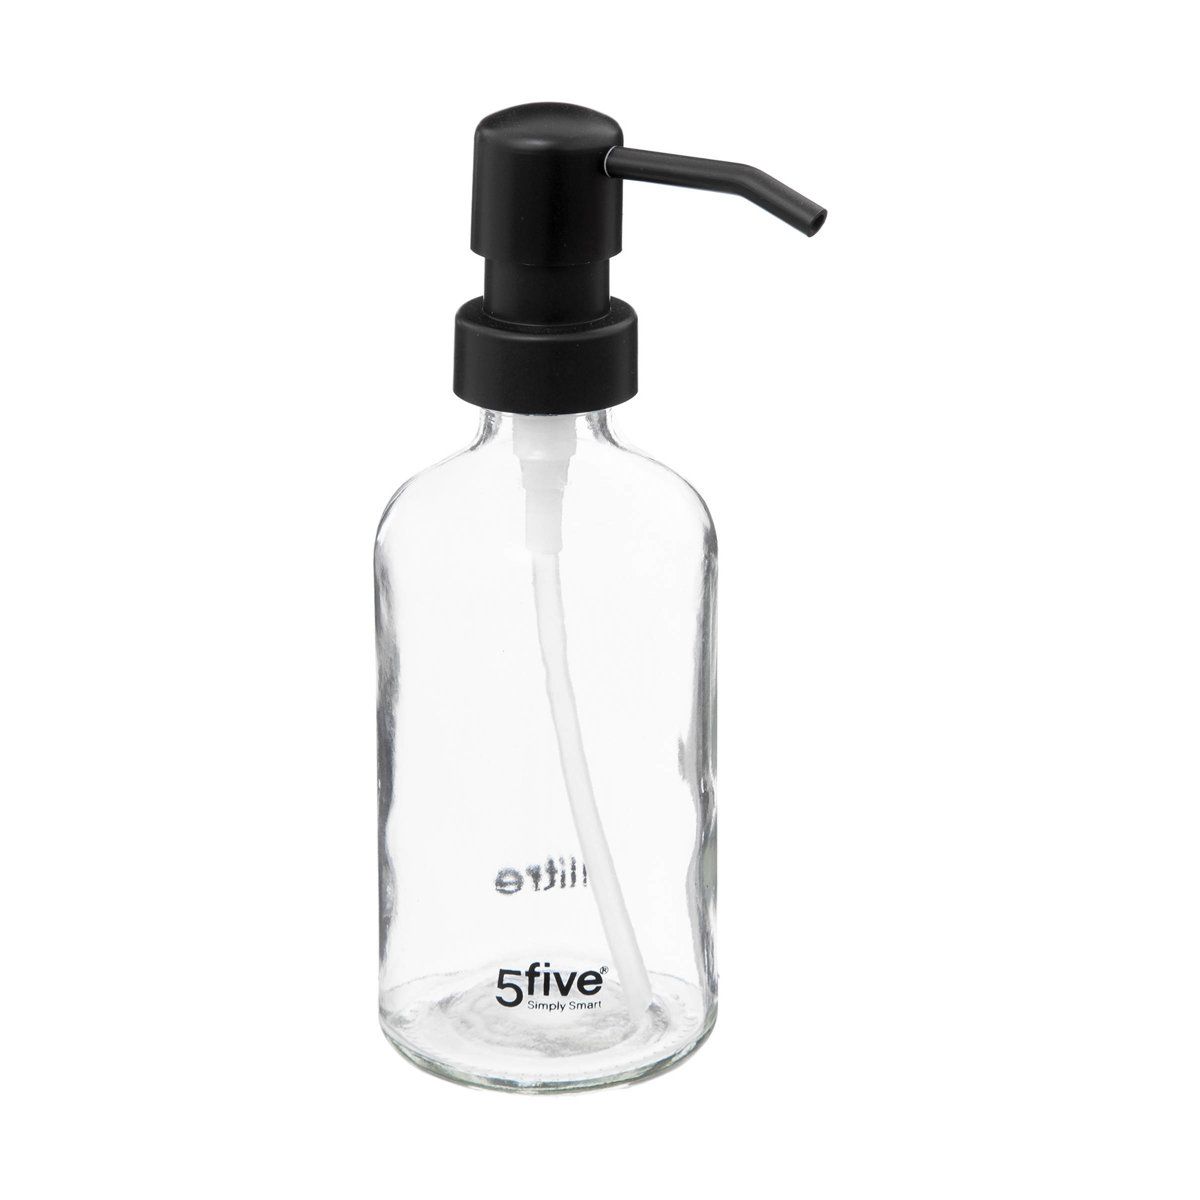 5five Simply Smart Dávkovač mýdla, skleněný, 250 ml - EMAKO.CZ s.r.o.